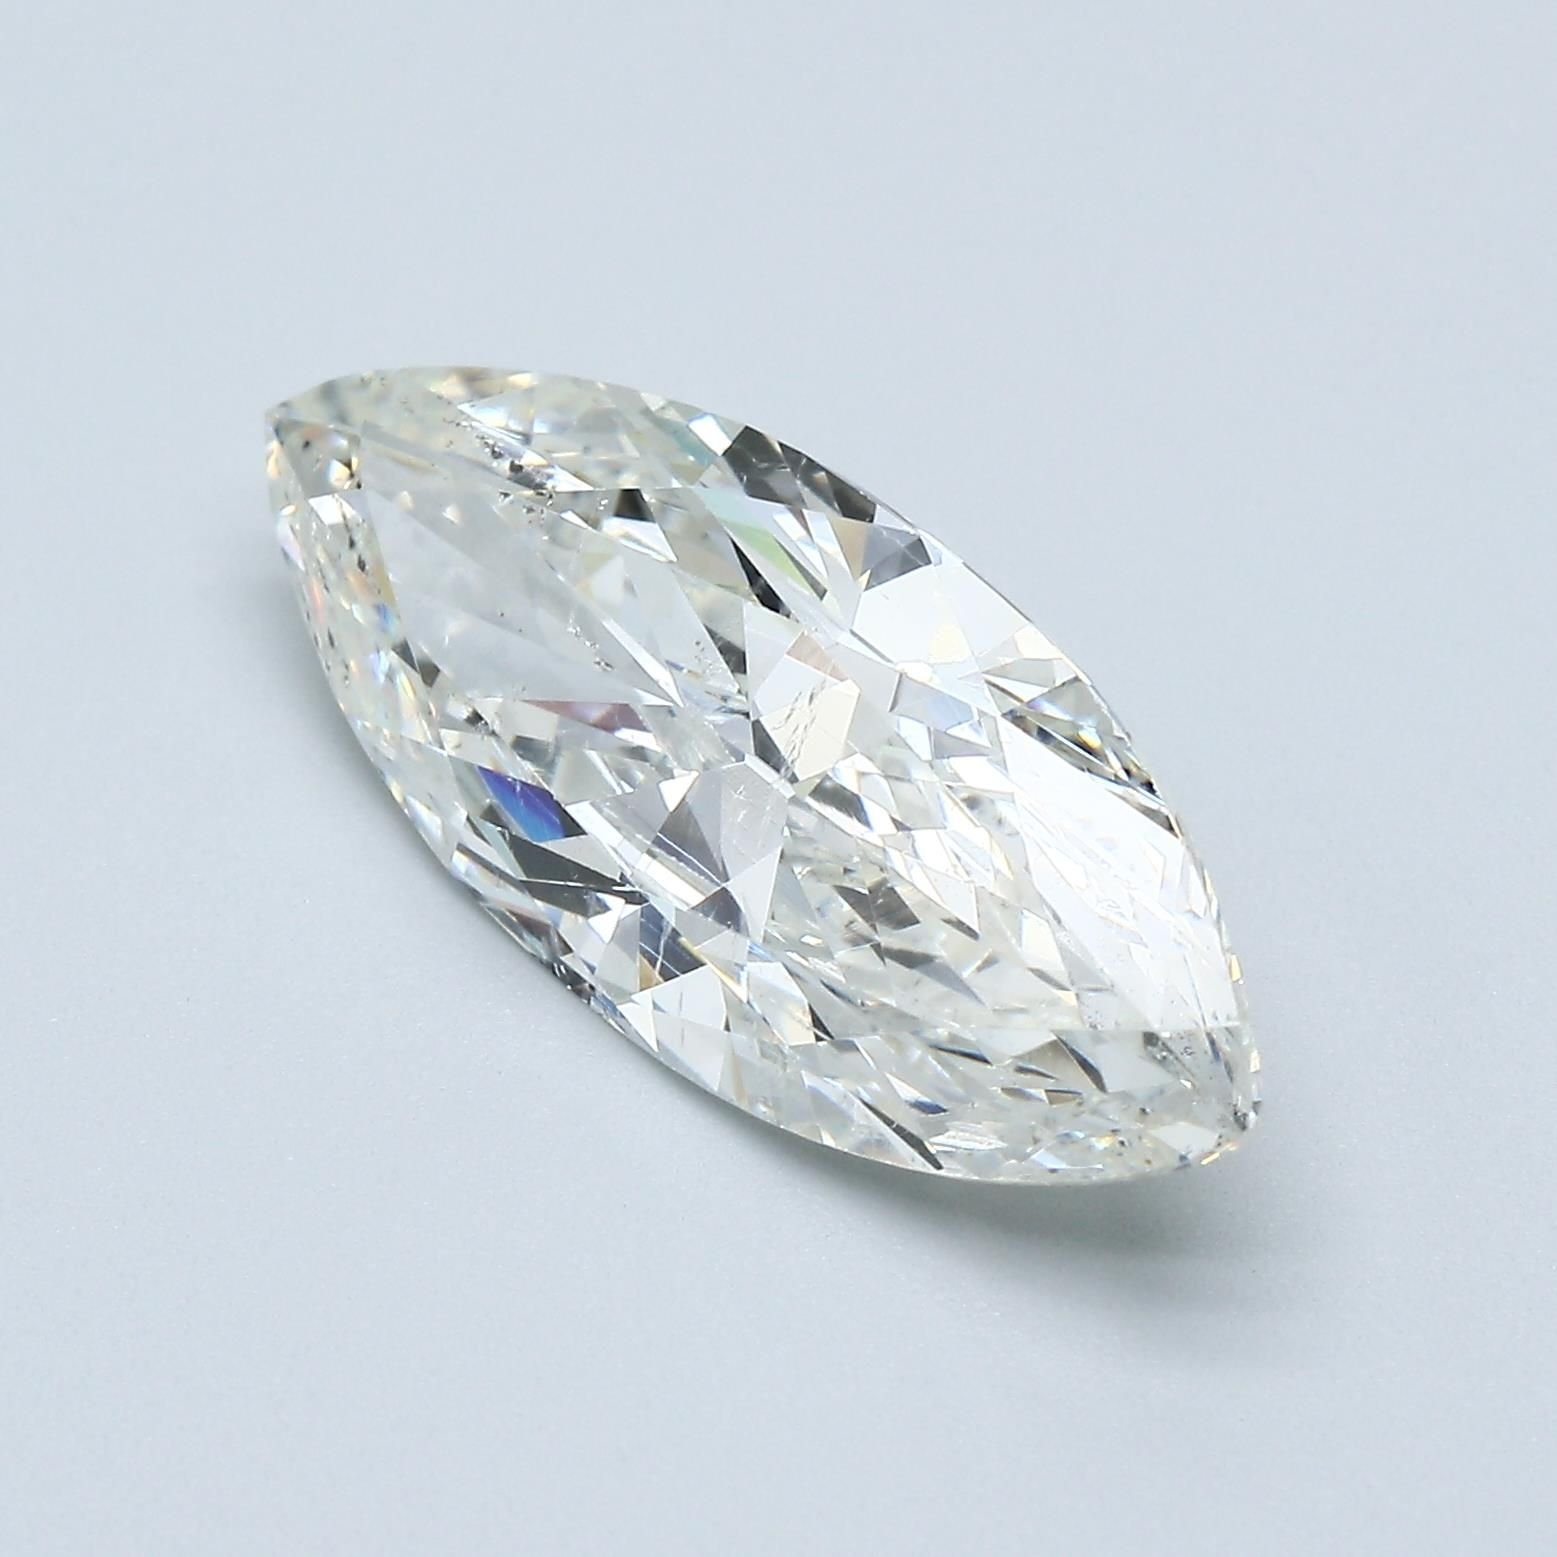 4.84ct J SI2 Very Good Cut Marquise Diamond